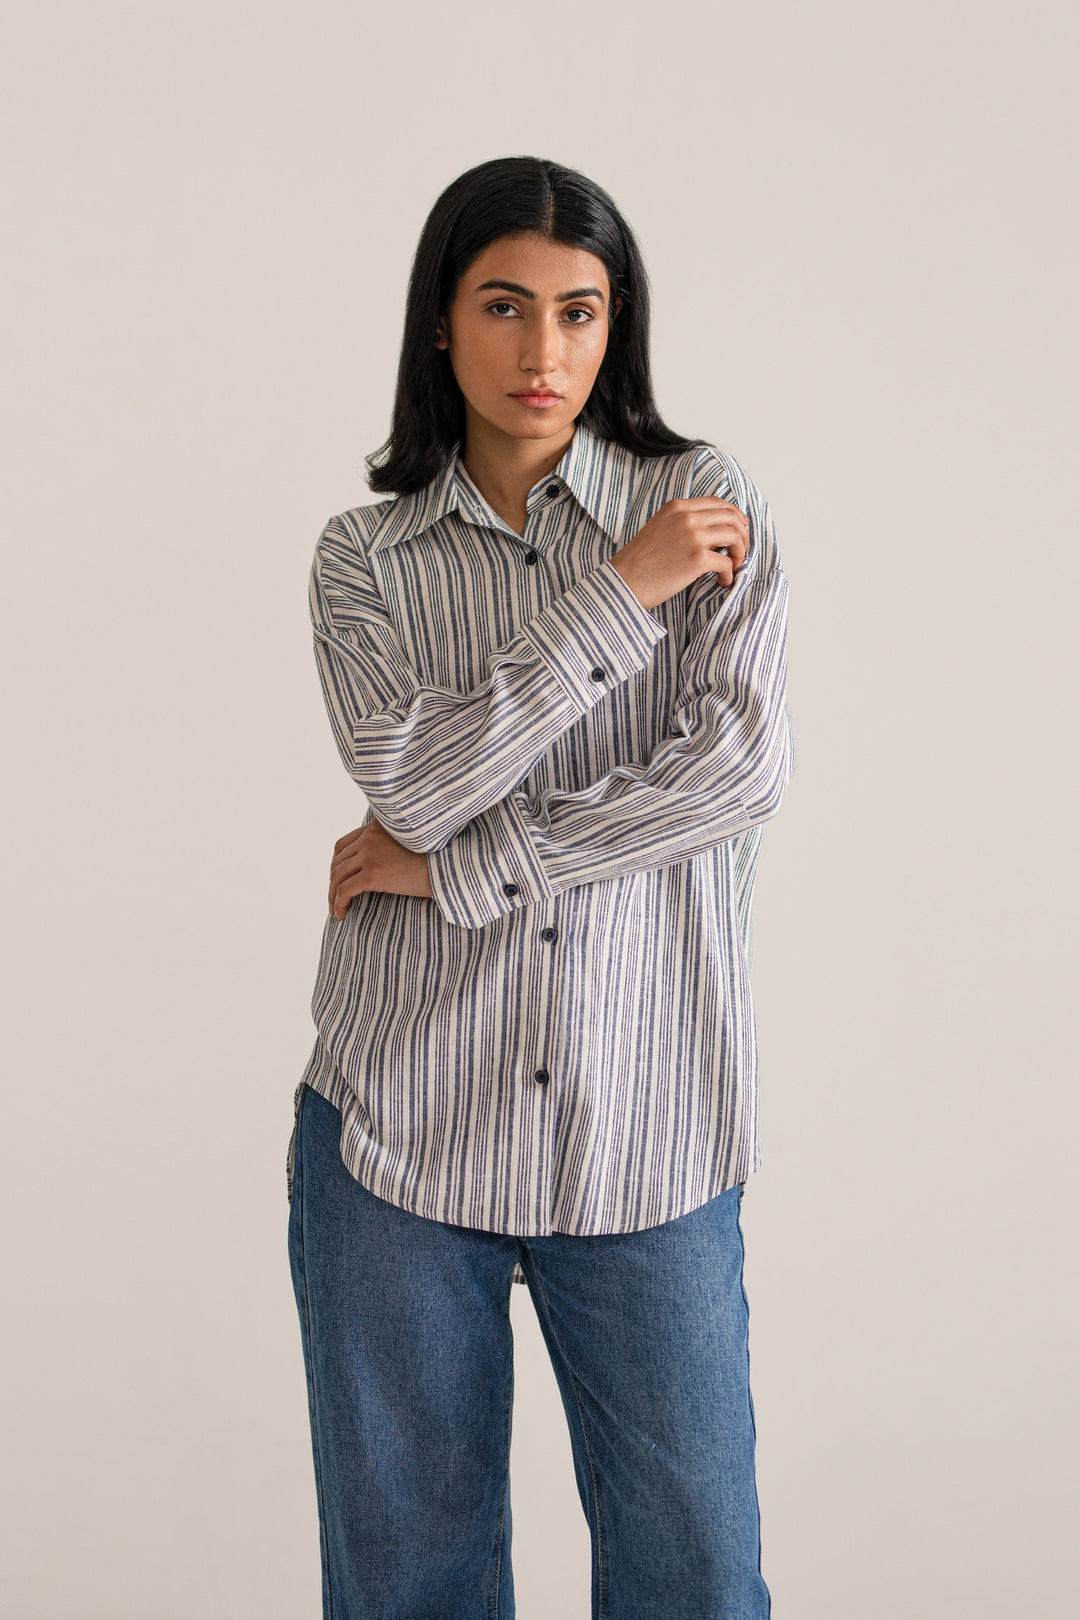 Blue & White Striped Linen Shirt in Pakistan